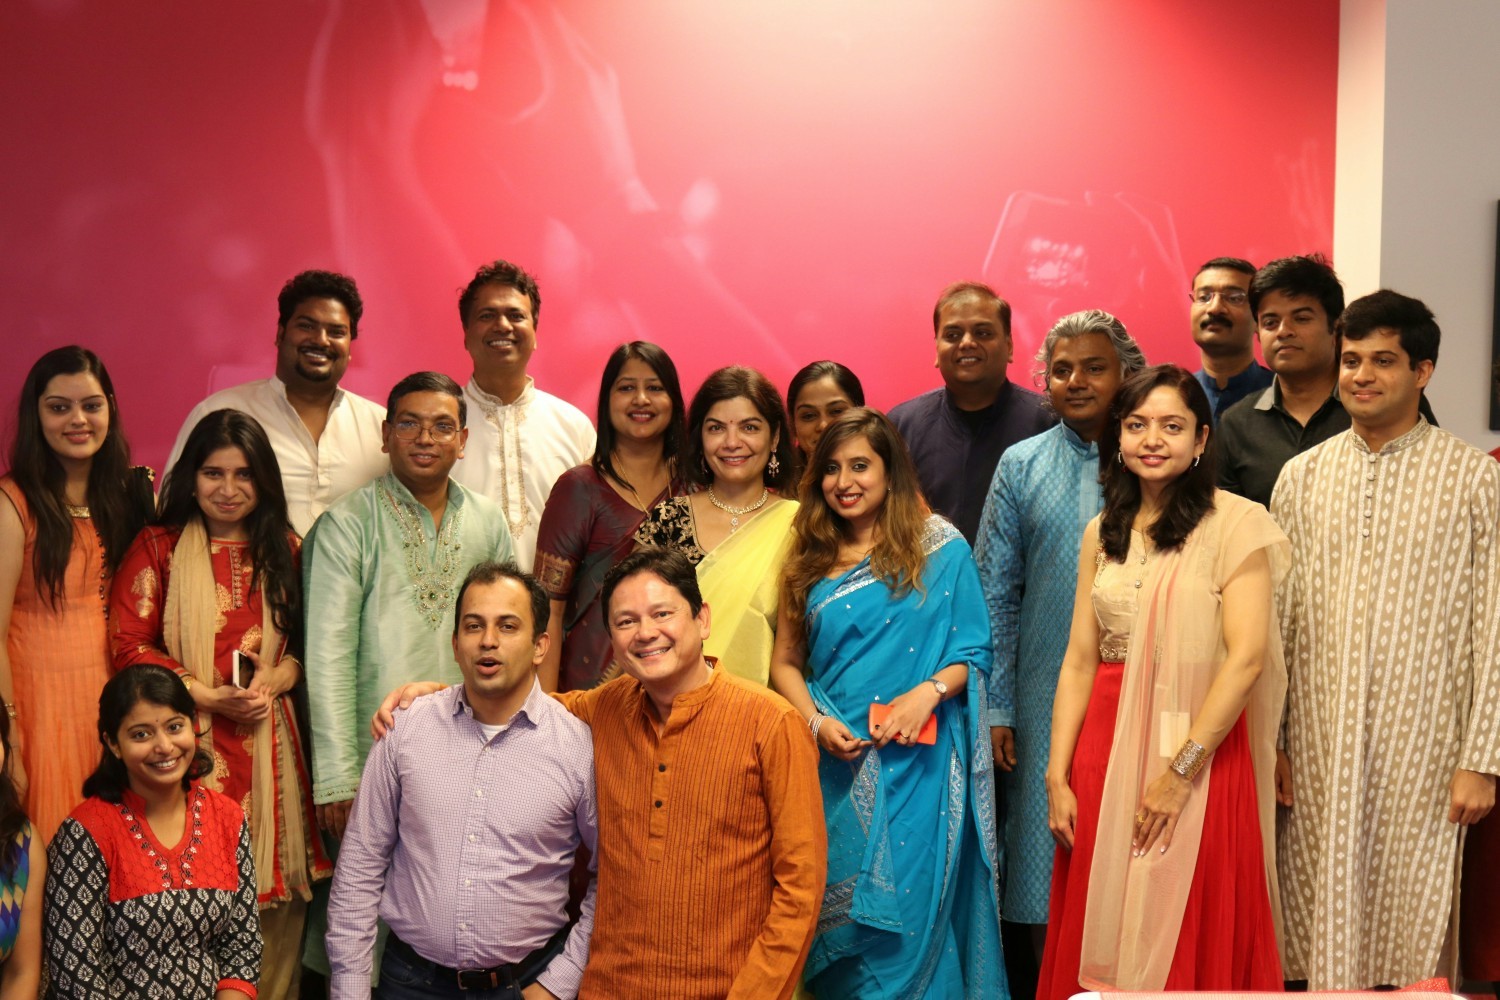 Celebrating Diwali festival at the office